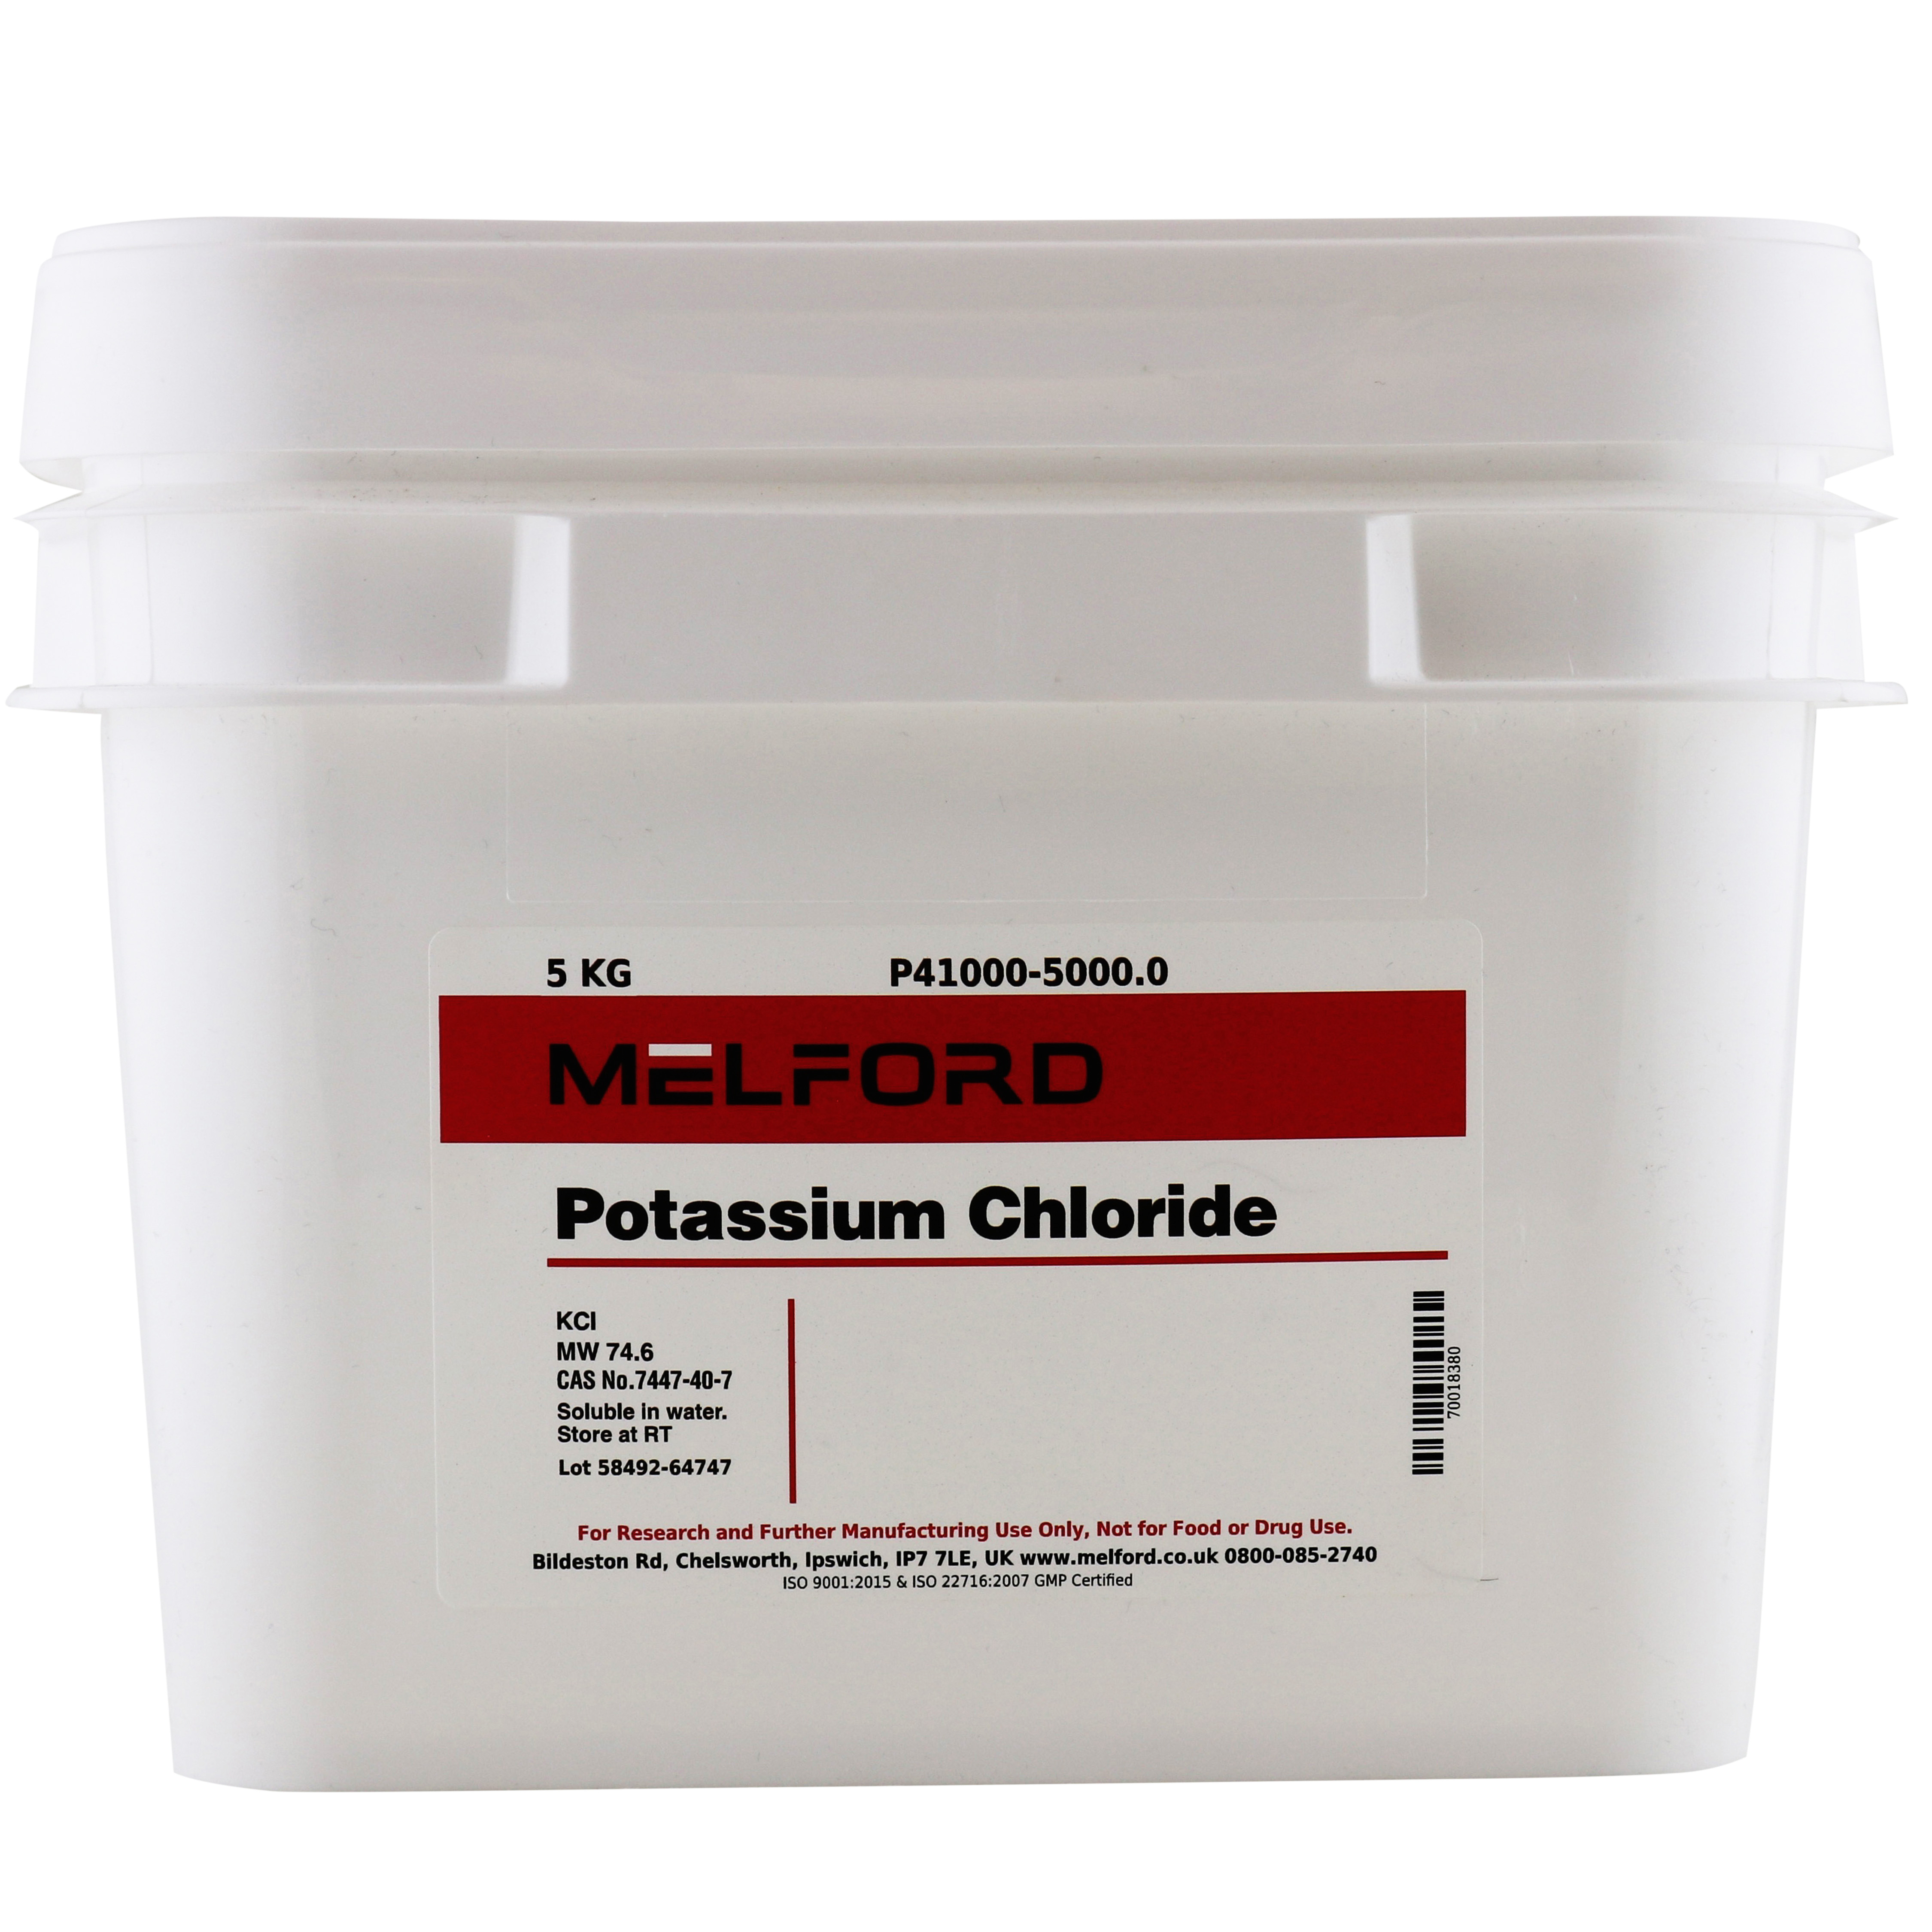 Sodium 0.5 8 mc 1.20 1. Potassium chloride. Potassium chloride в косметике. Cegecol Epofix cj3 Blanc composant a+b seau 5 kg. Phosphorus chloride 5 State.